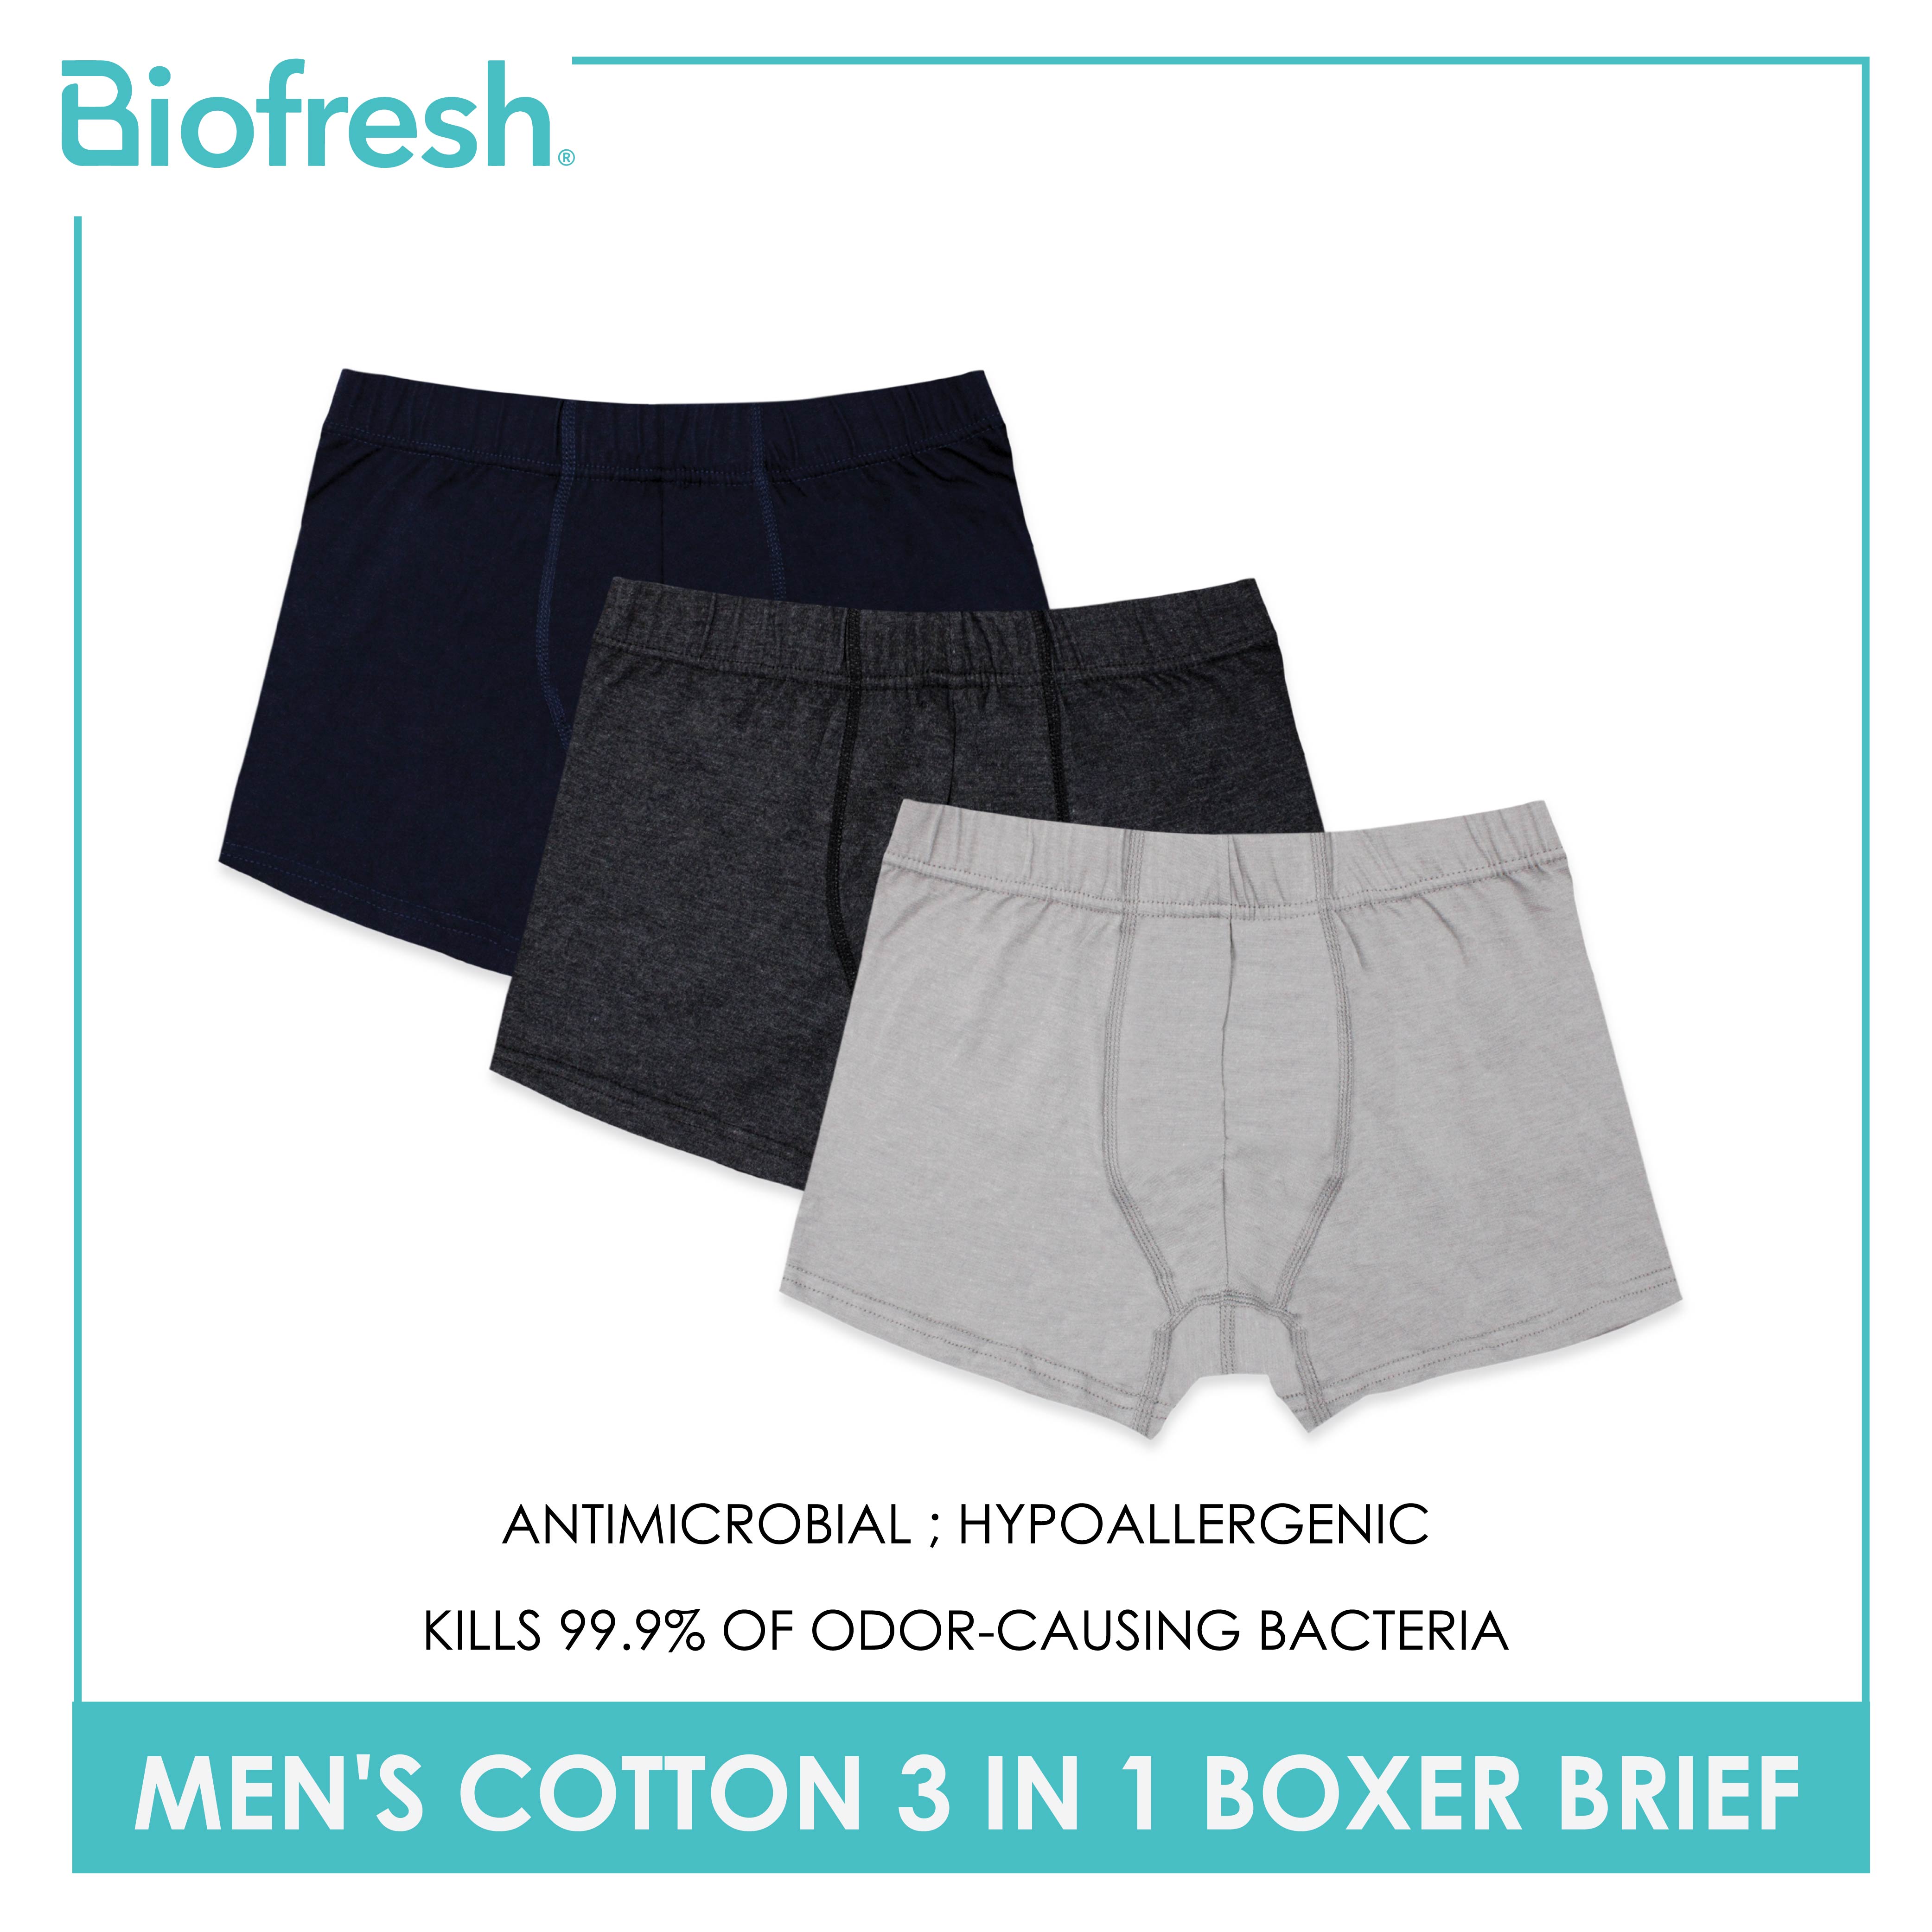 Biofresh PH - Life's too short to wear mediocre underwear